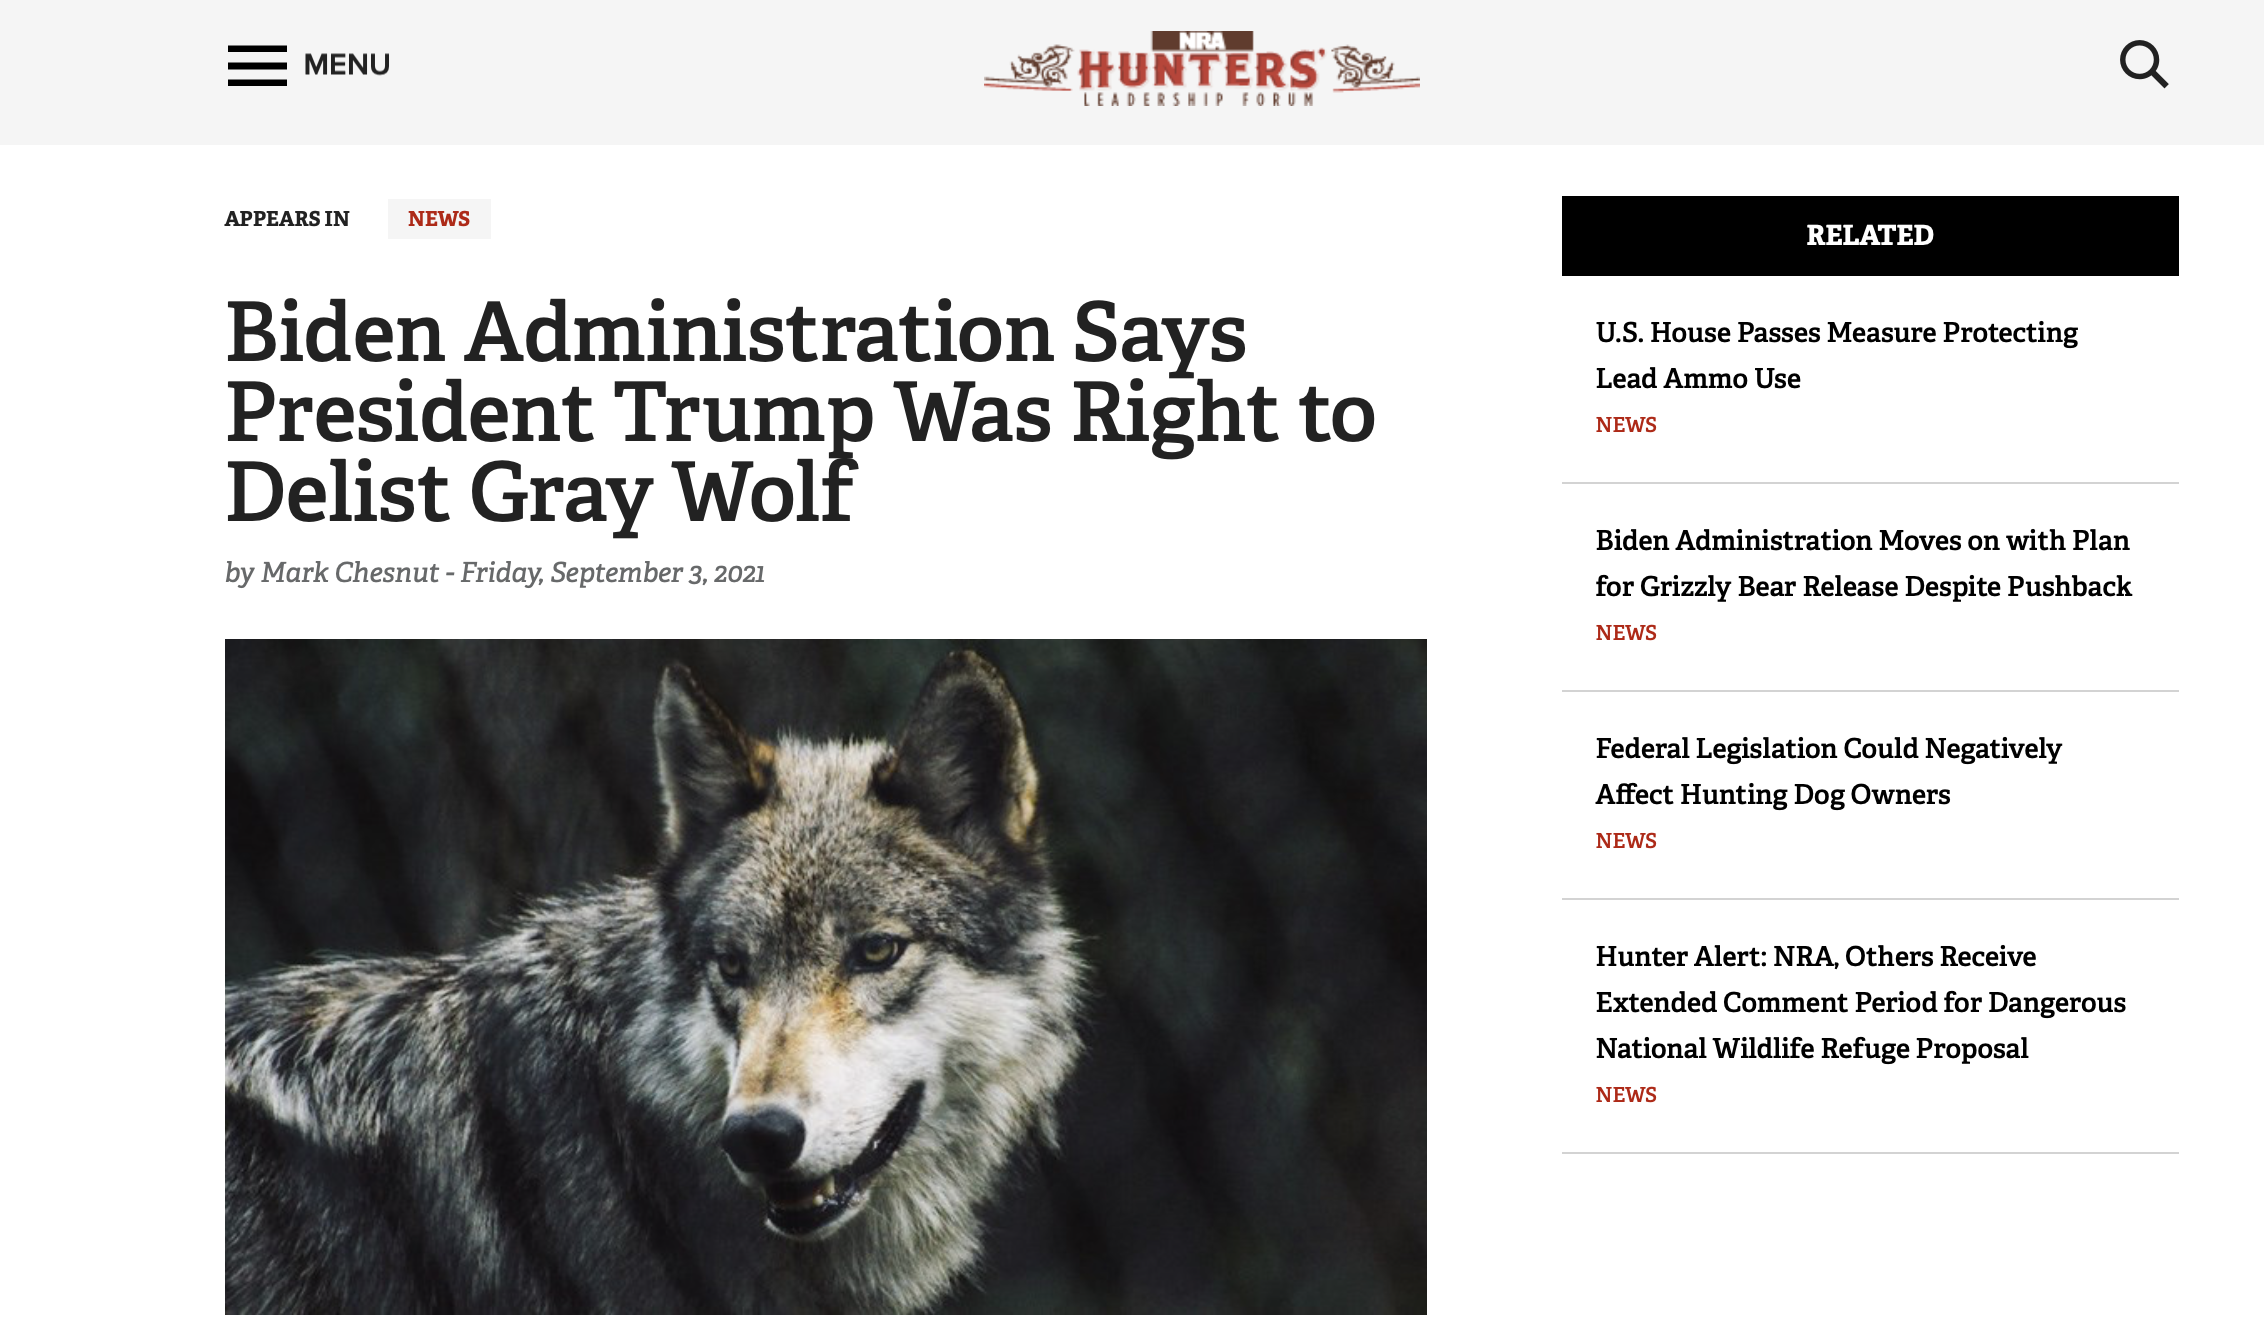 nra hlf screen shot explaining Biden admin agreed with trump admin regarding gray wolf delisting